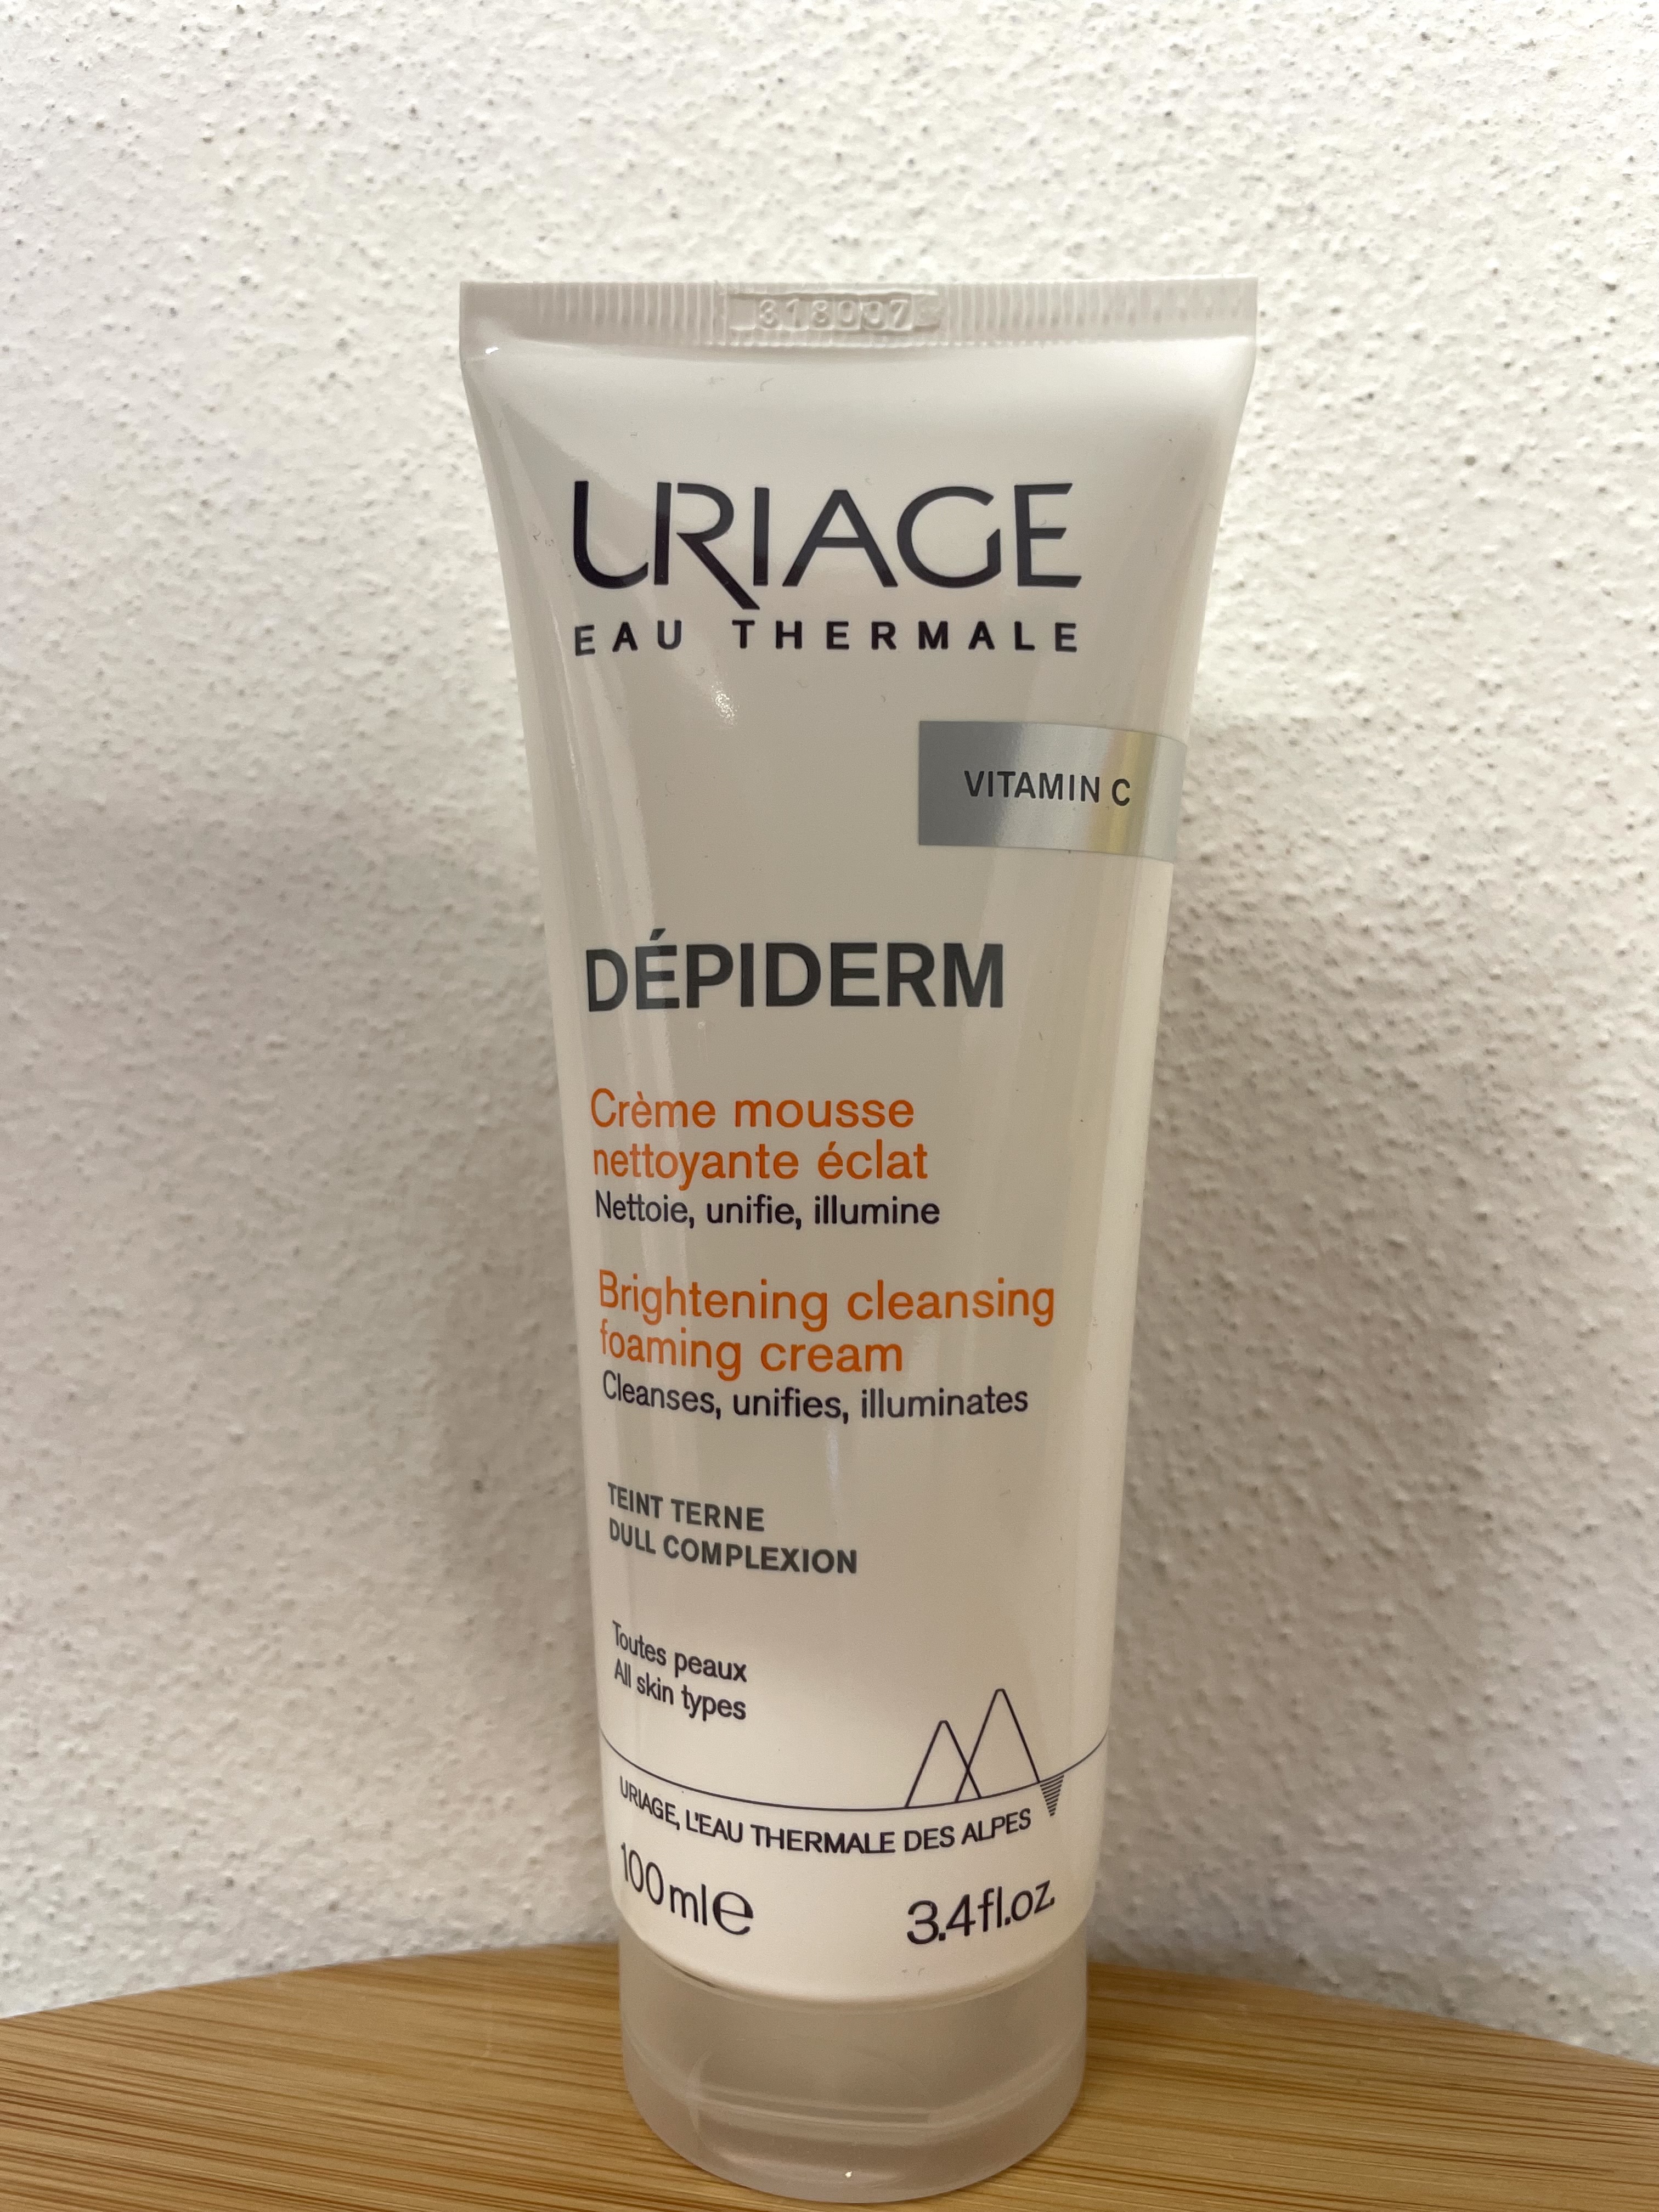 Uriage: Depiderm Brightening cleansing foaming cream